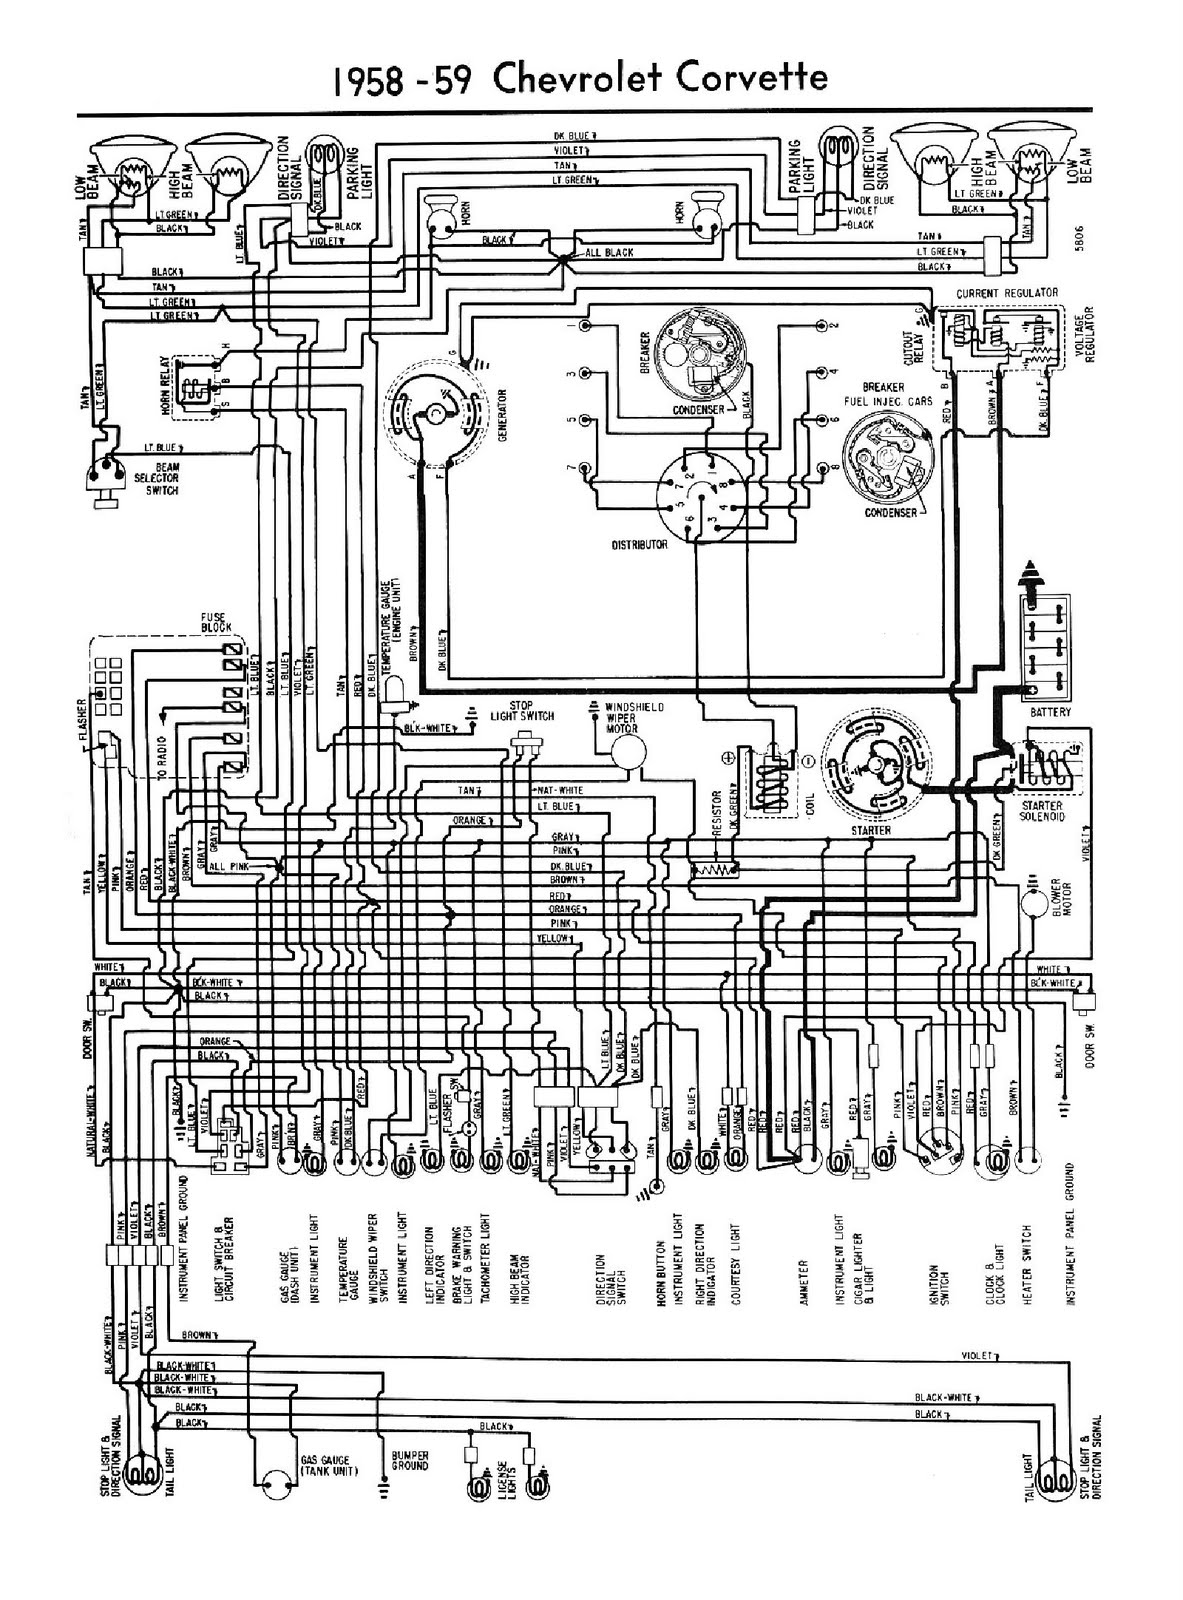 Free Auto Wiring Diagram: 1958-1959 Chevrolet Corvette ...